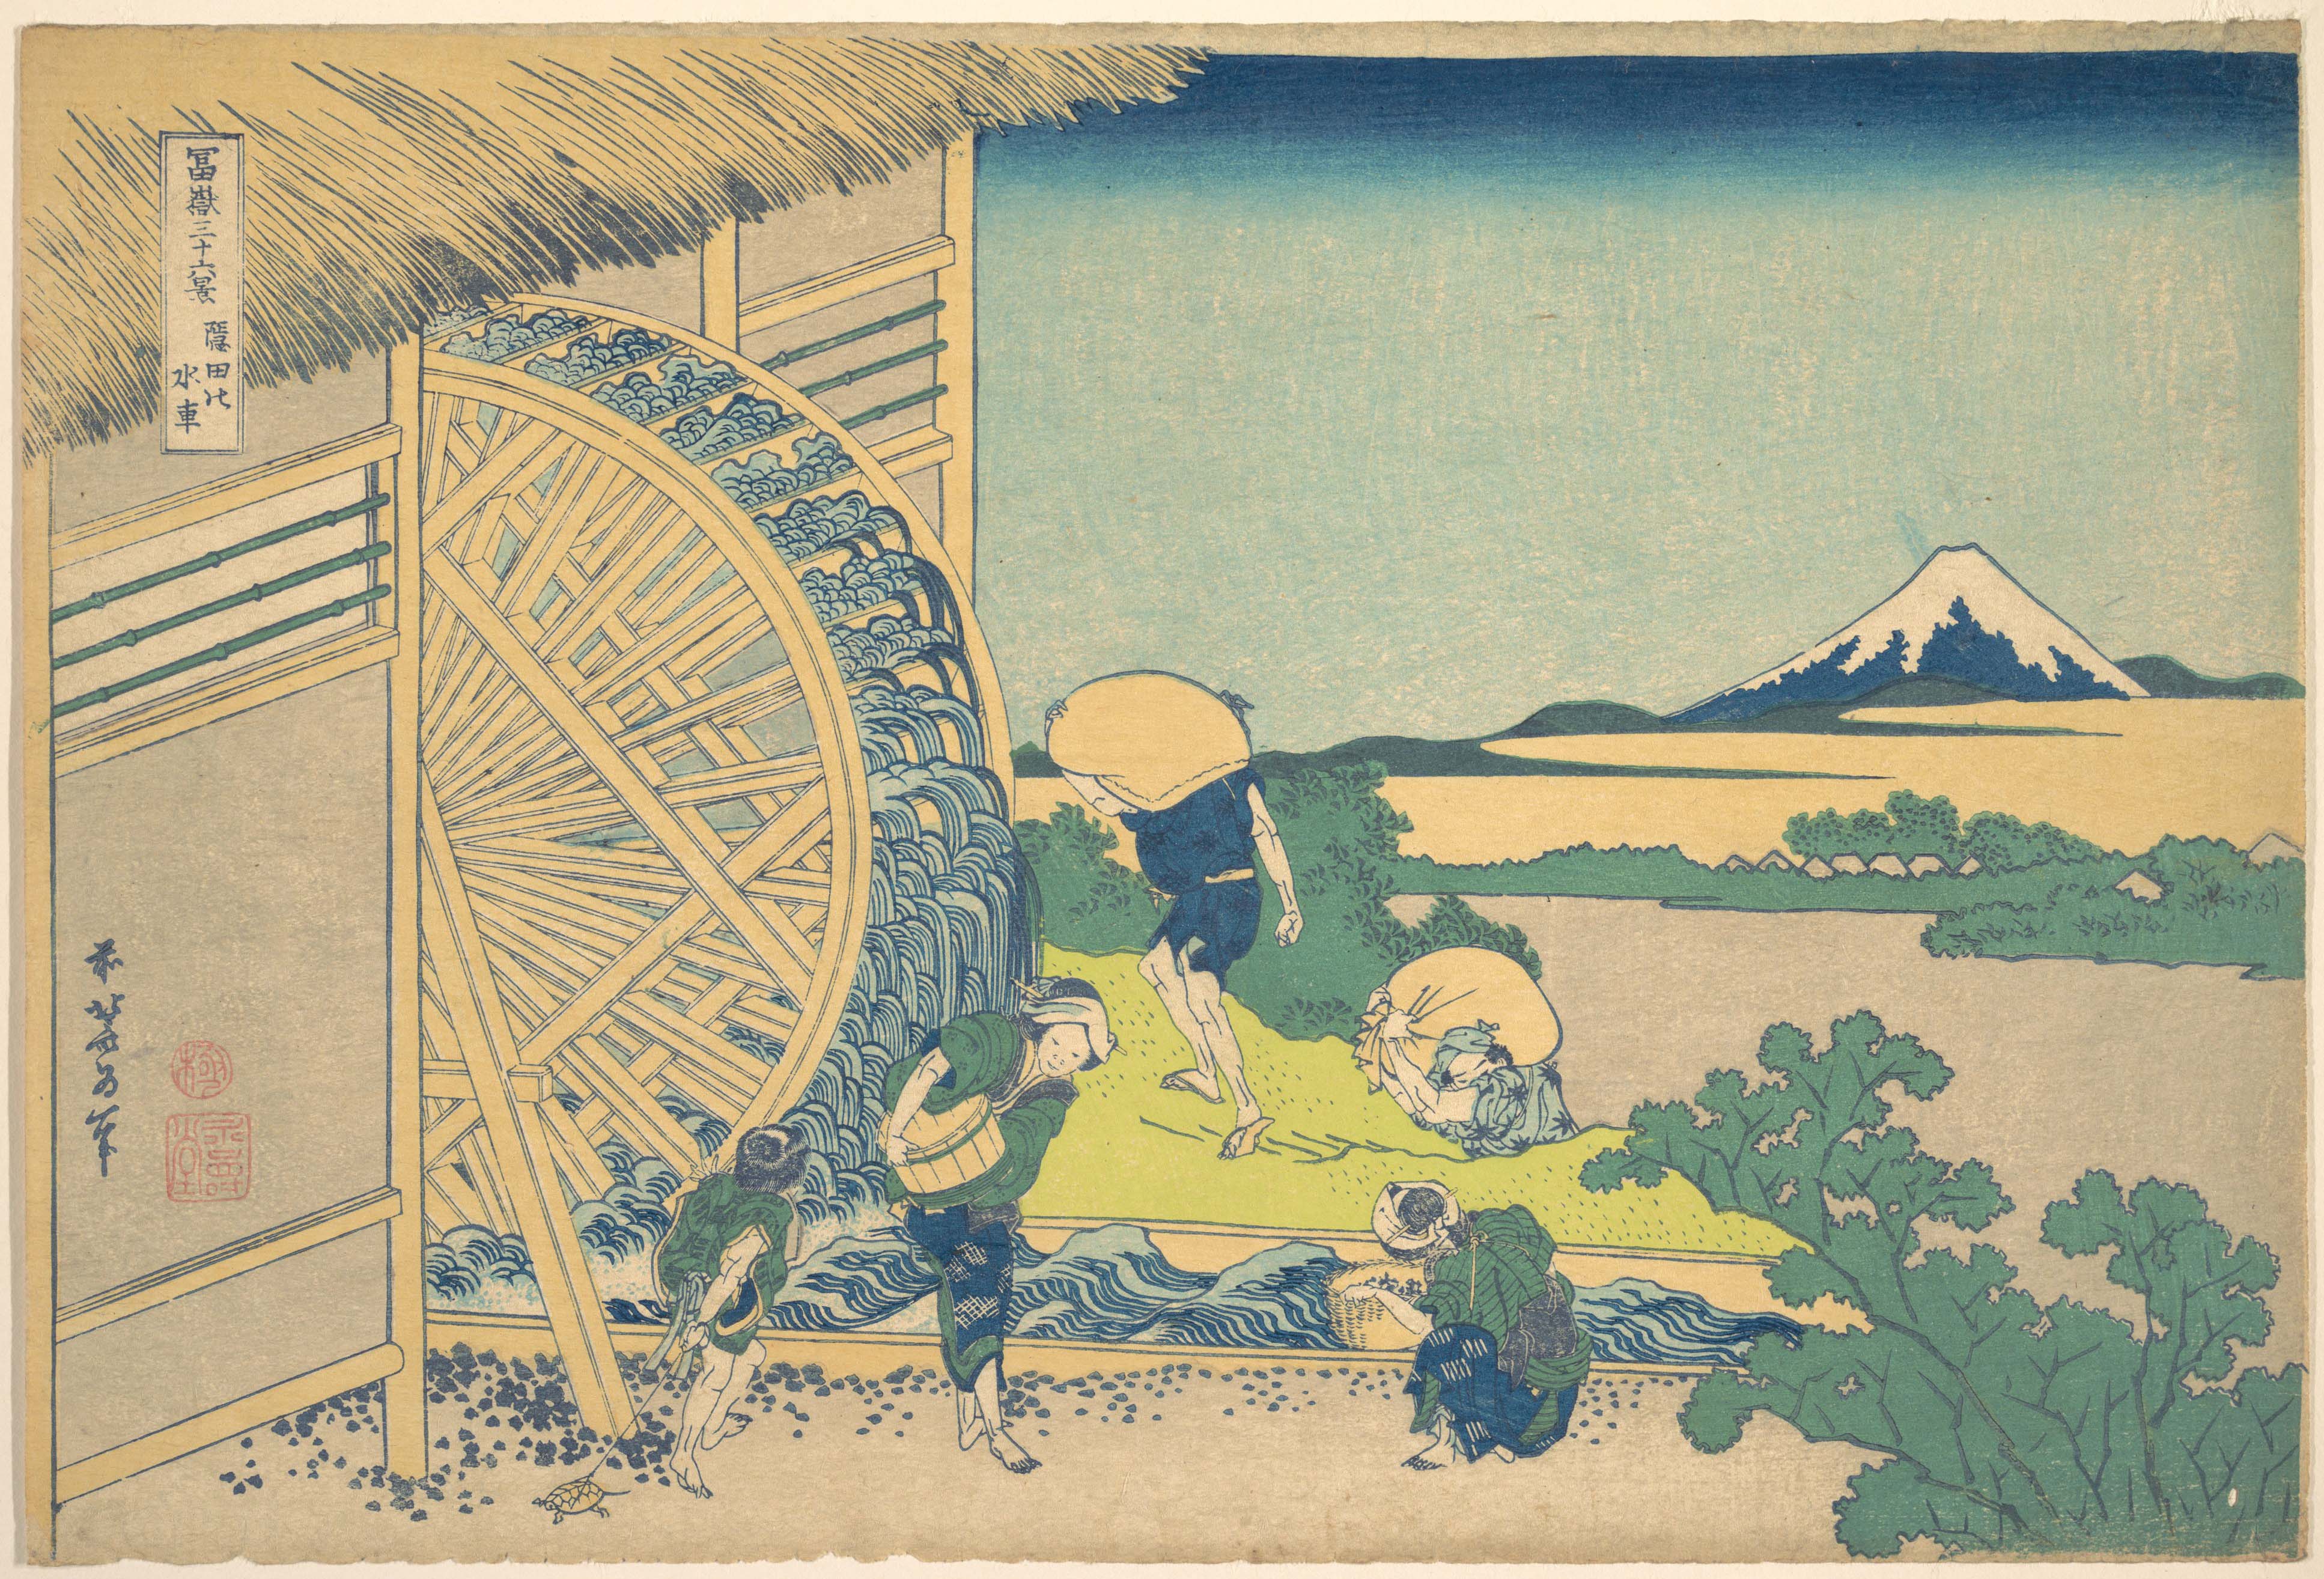 Katsushika Hokusai. The Waterwheel at Onden, from the series Thirty-six Views of Mount Fuji